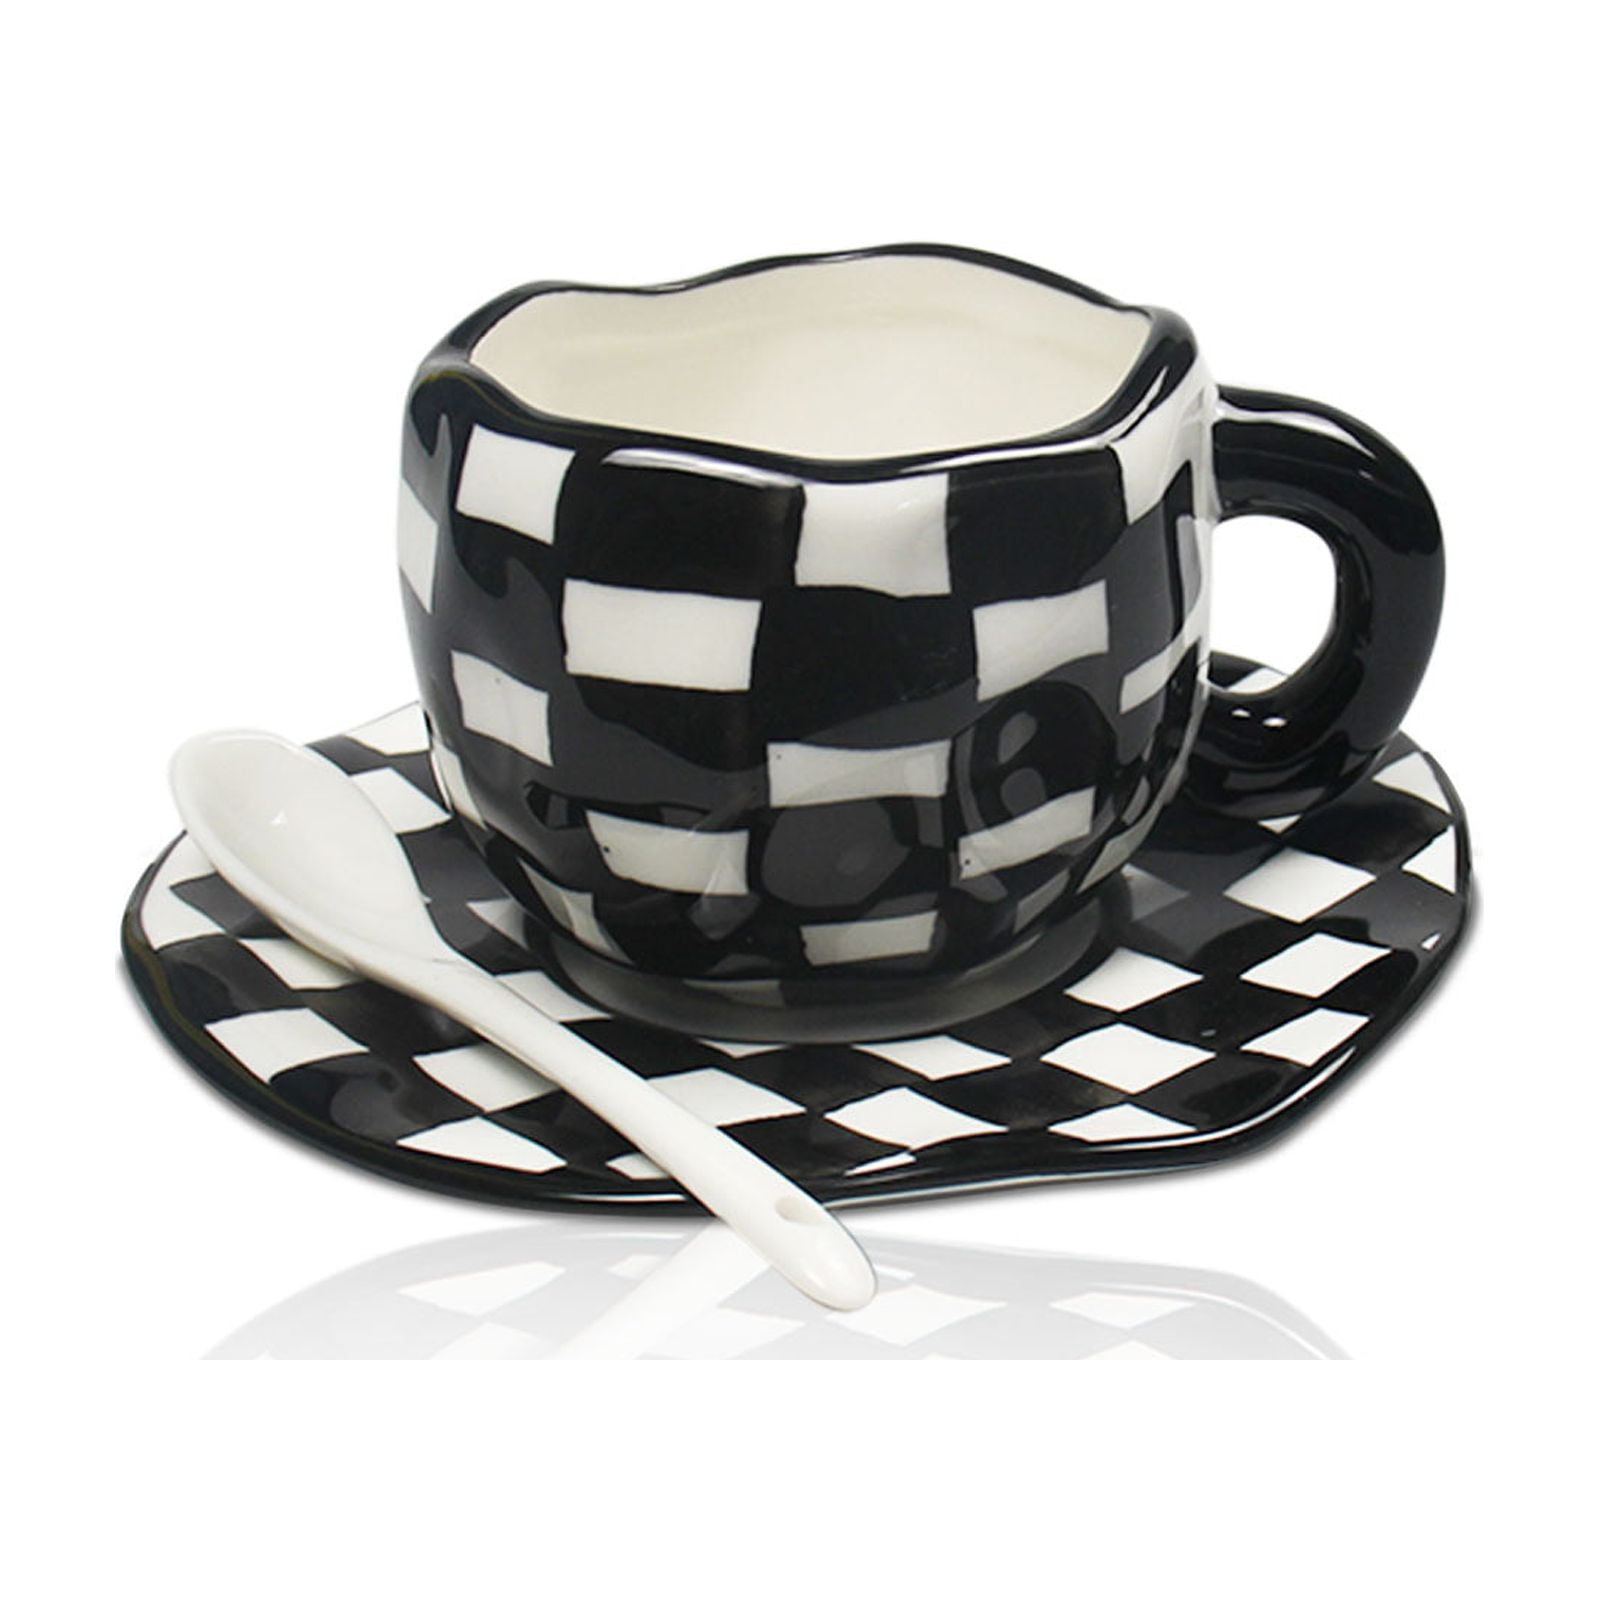 CLASSIC CAR COFFEE MUG CUP GLASS BLACK WHITE EMBOSSED CERAMIC 3D  AUTOMOBILIA